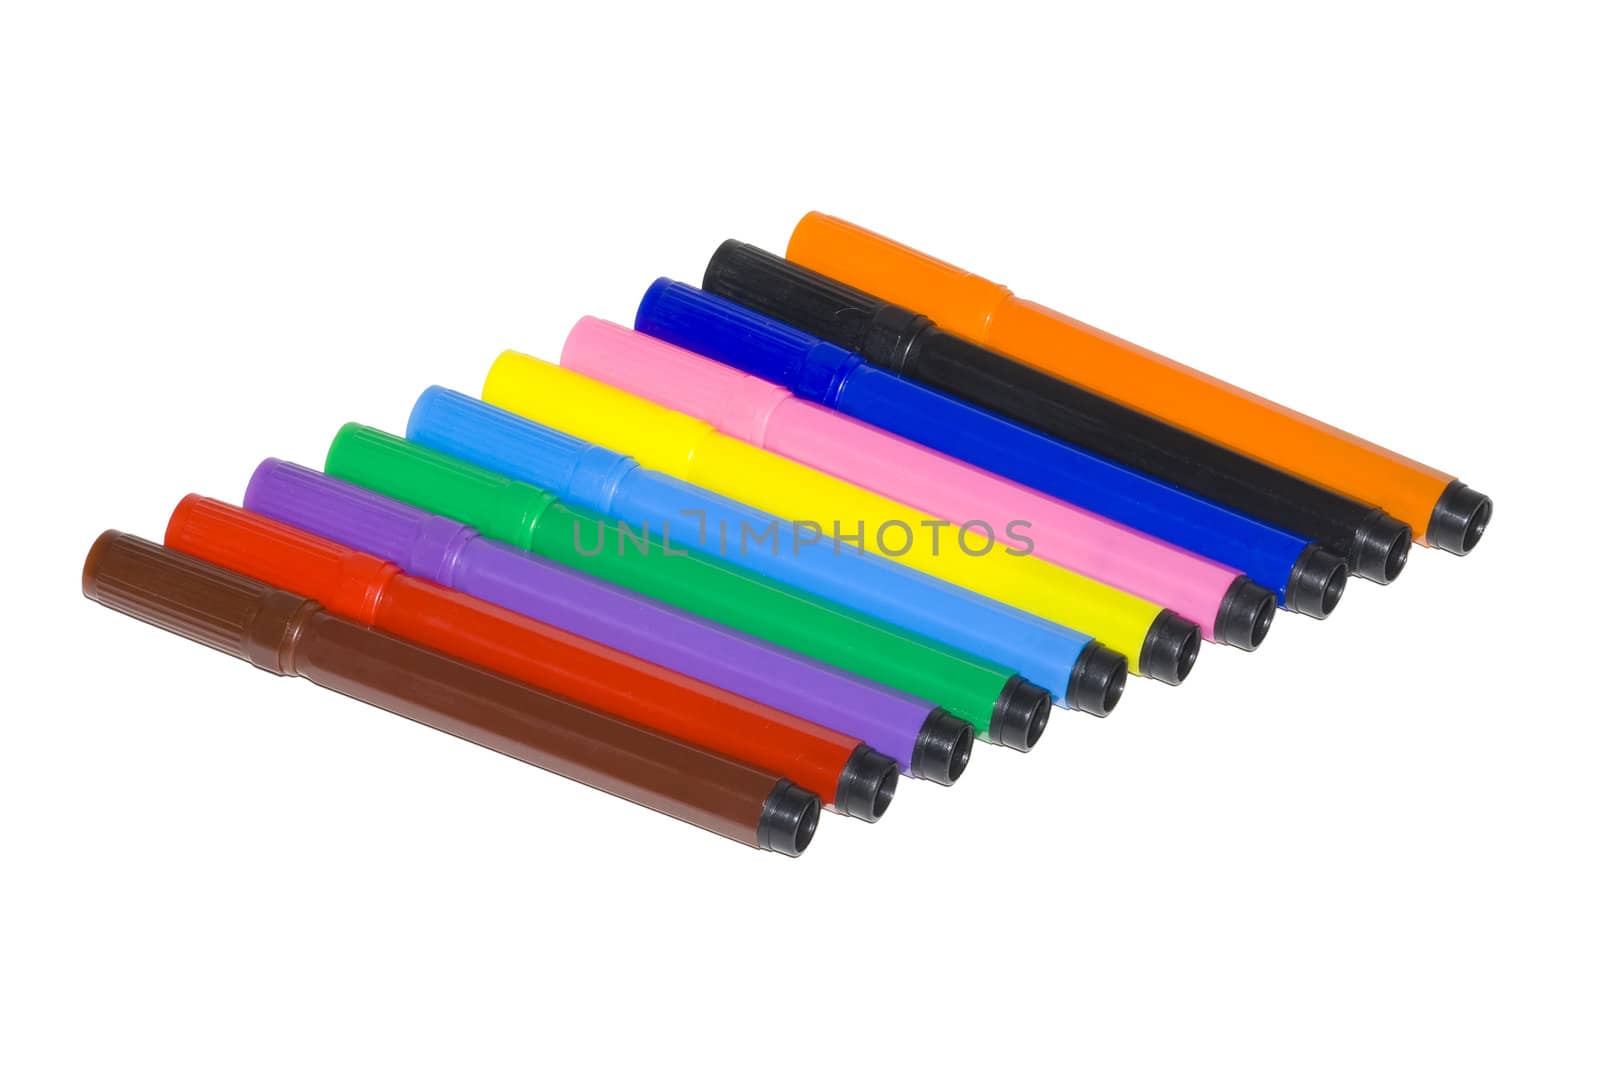 Color felt pen for school beginners.